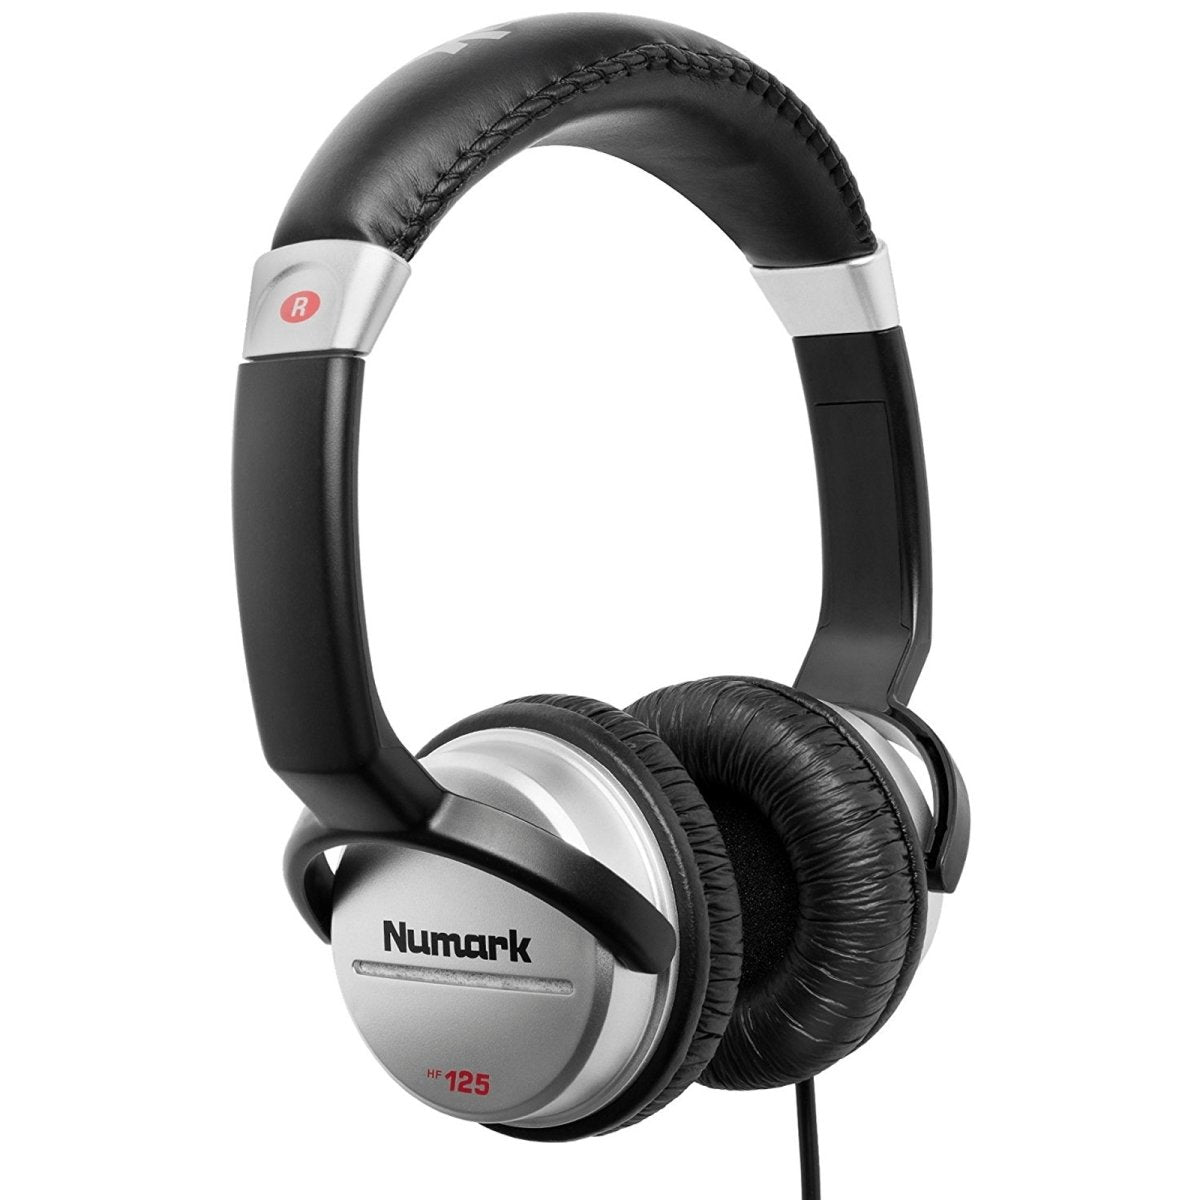 Numark HF125 / HF 125 Compact DJ Stereo Studio On-Ear Headphones | Atlantic Electrics